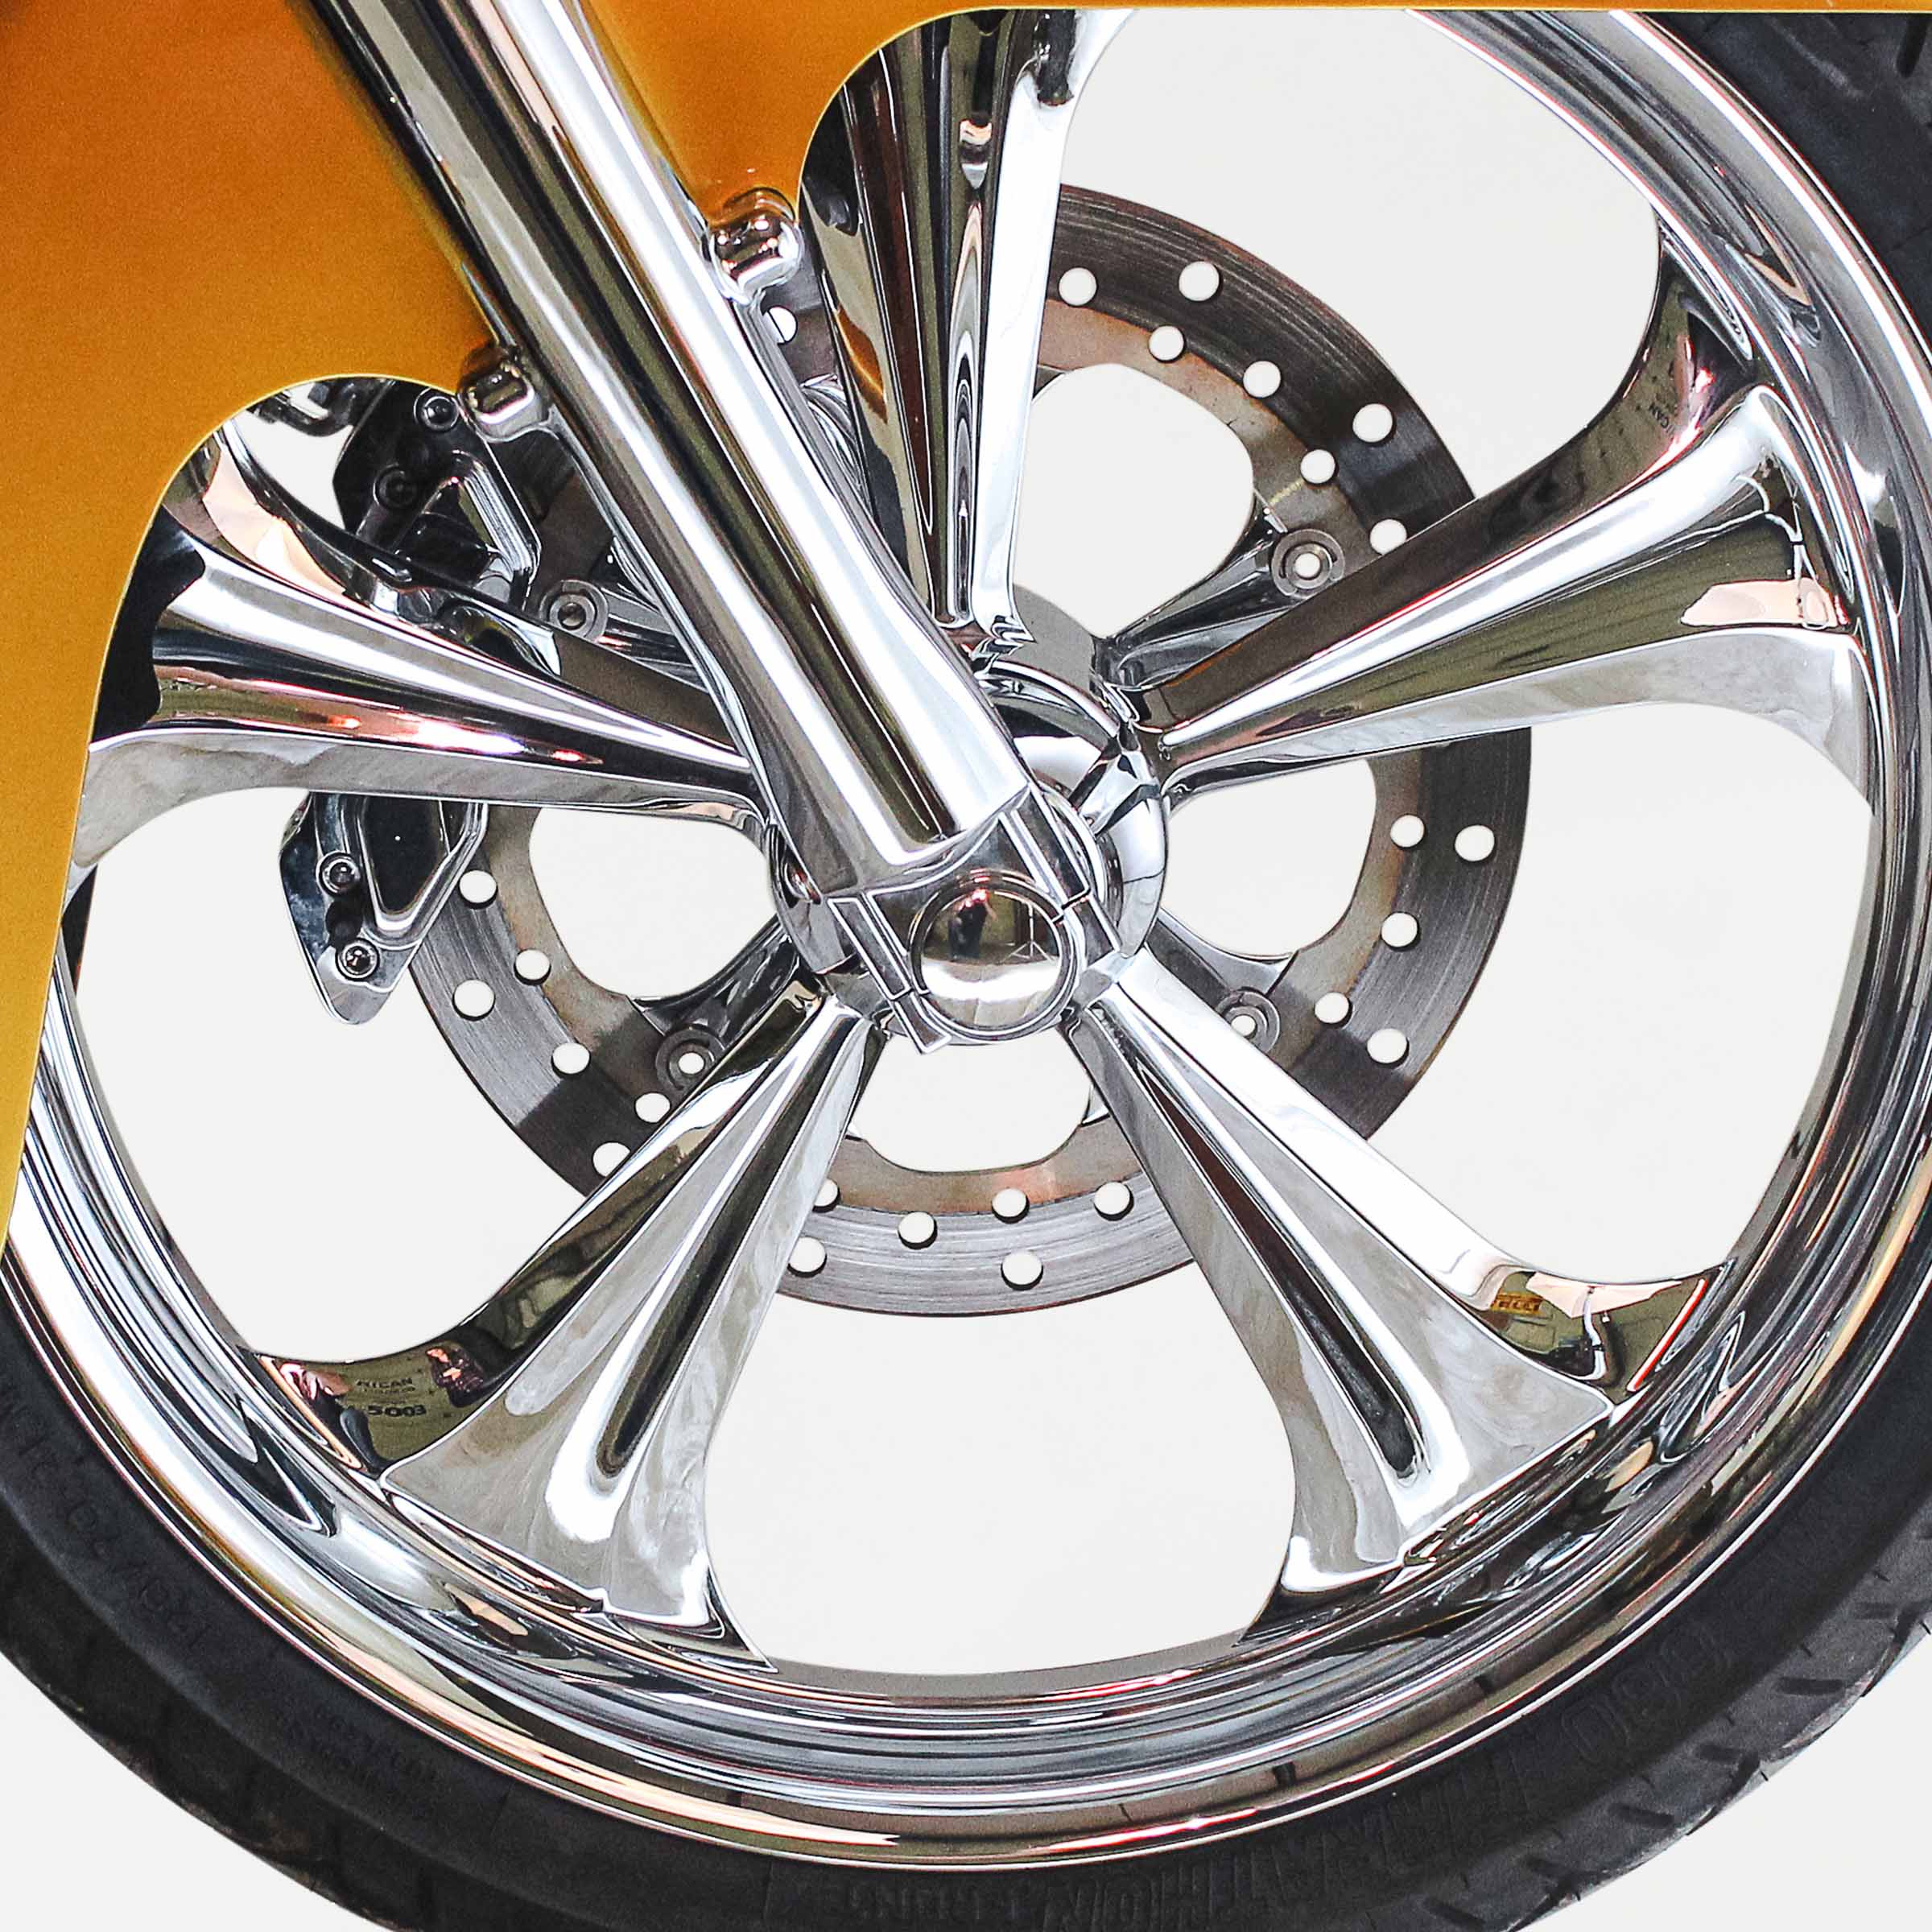 Chrome Fork-N-Finish Piece - Lower Fork Leg Cap for 2000 to 2013 Harley-Davidson Touring Models(Chrome)